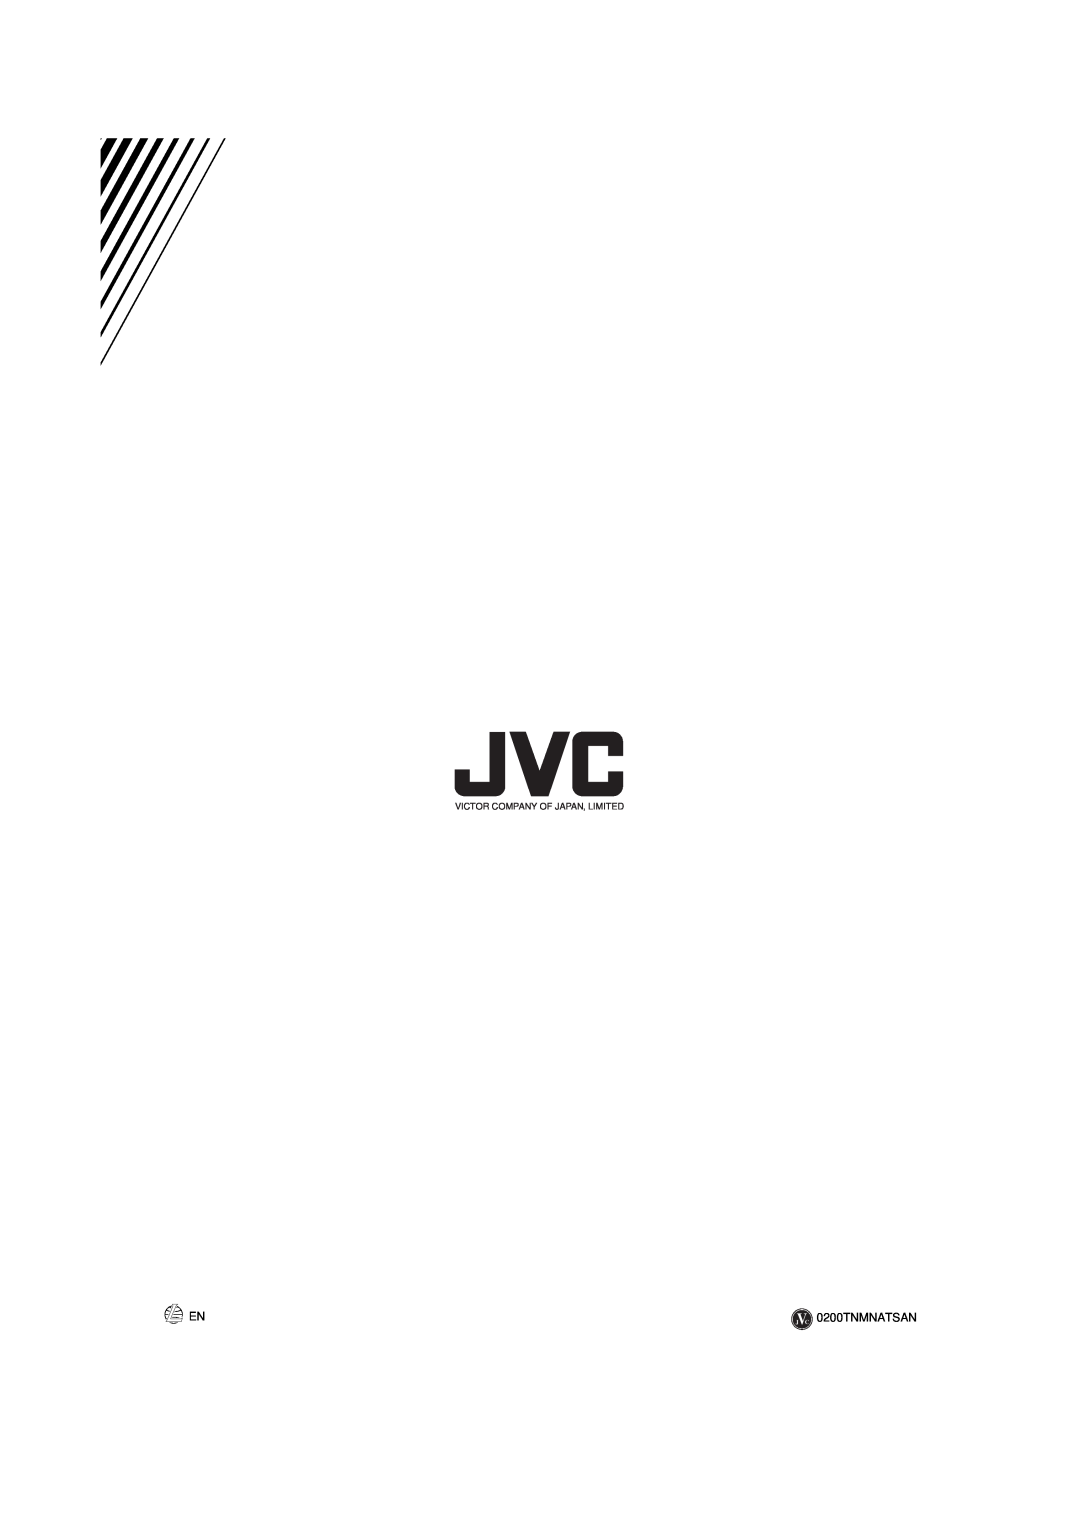 JVC TH-A10 manual 0200TNMNATSAN, Victor Company Of Japan, Limited 